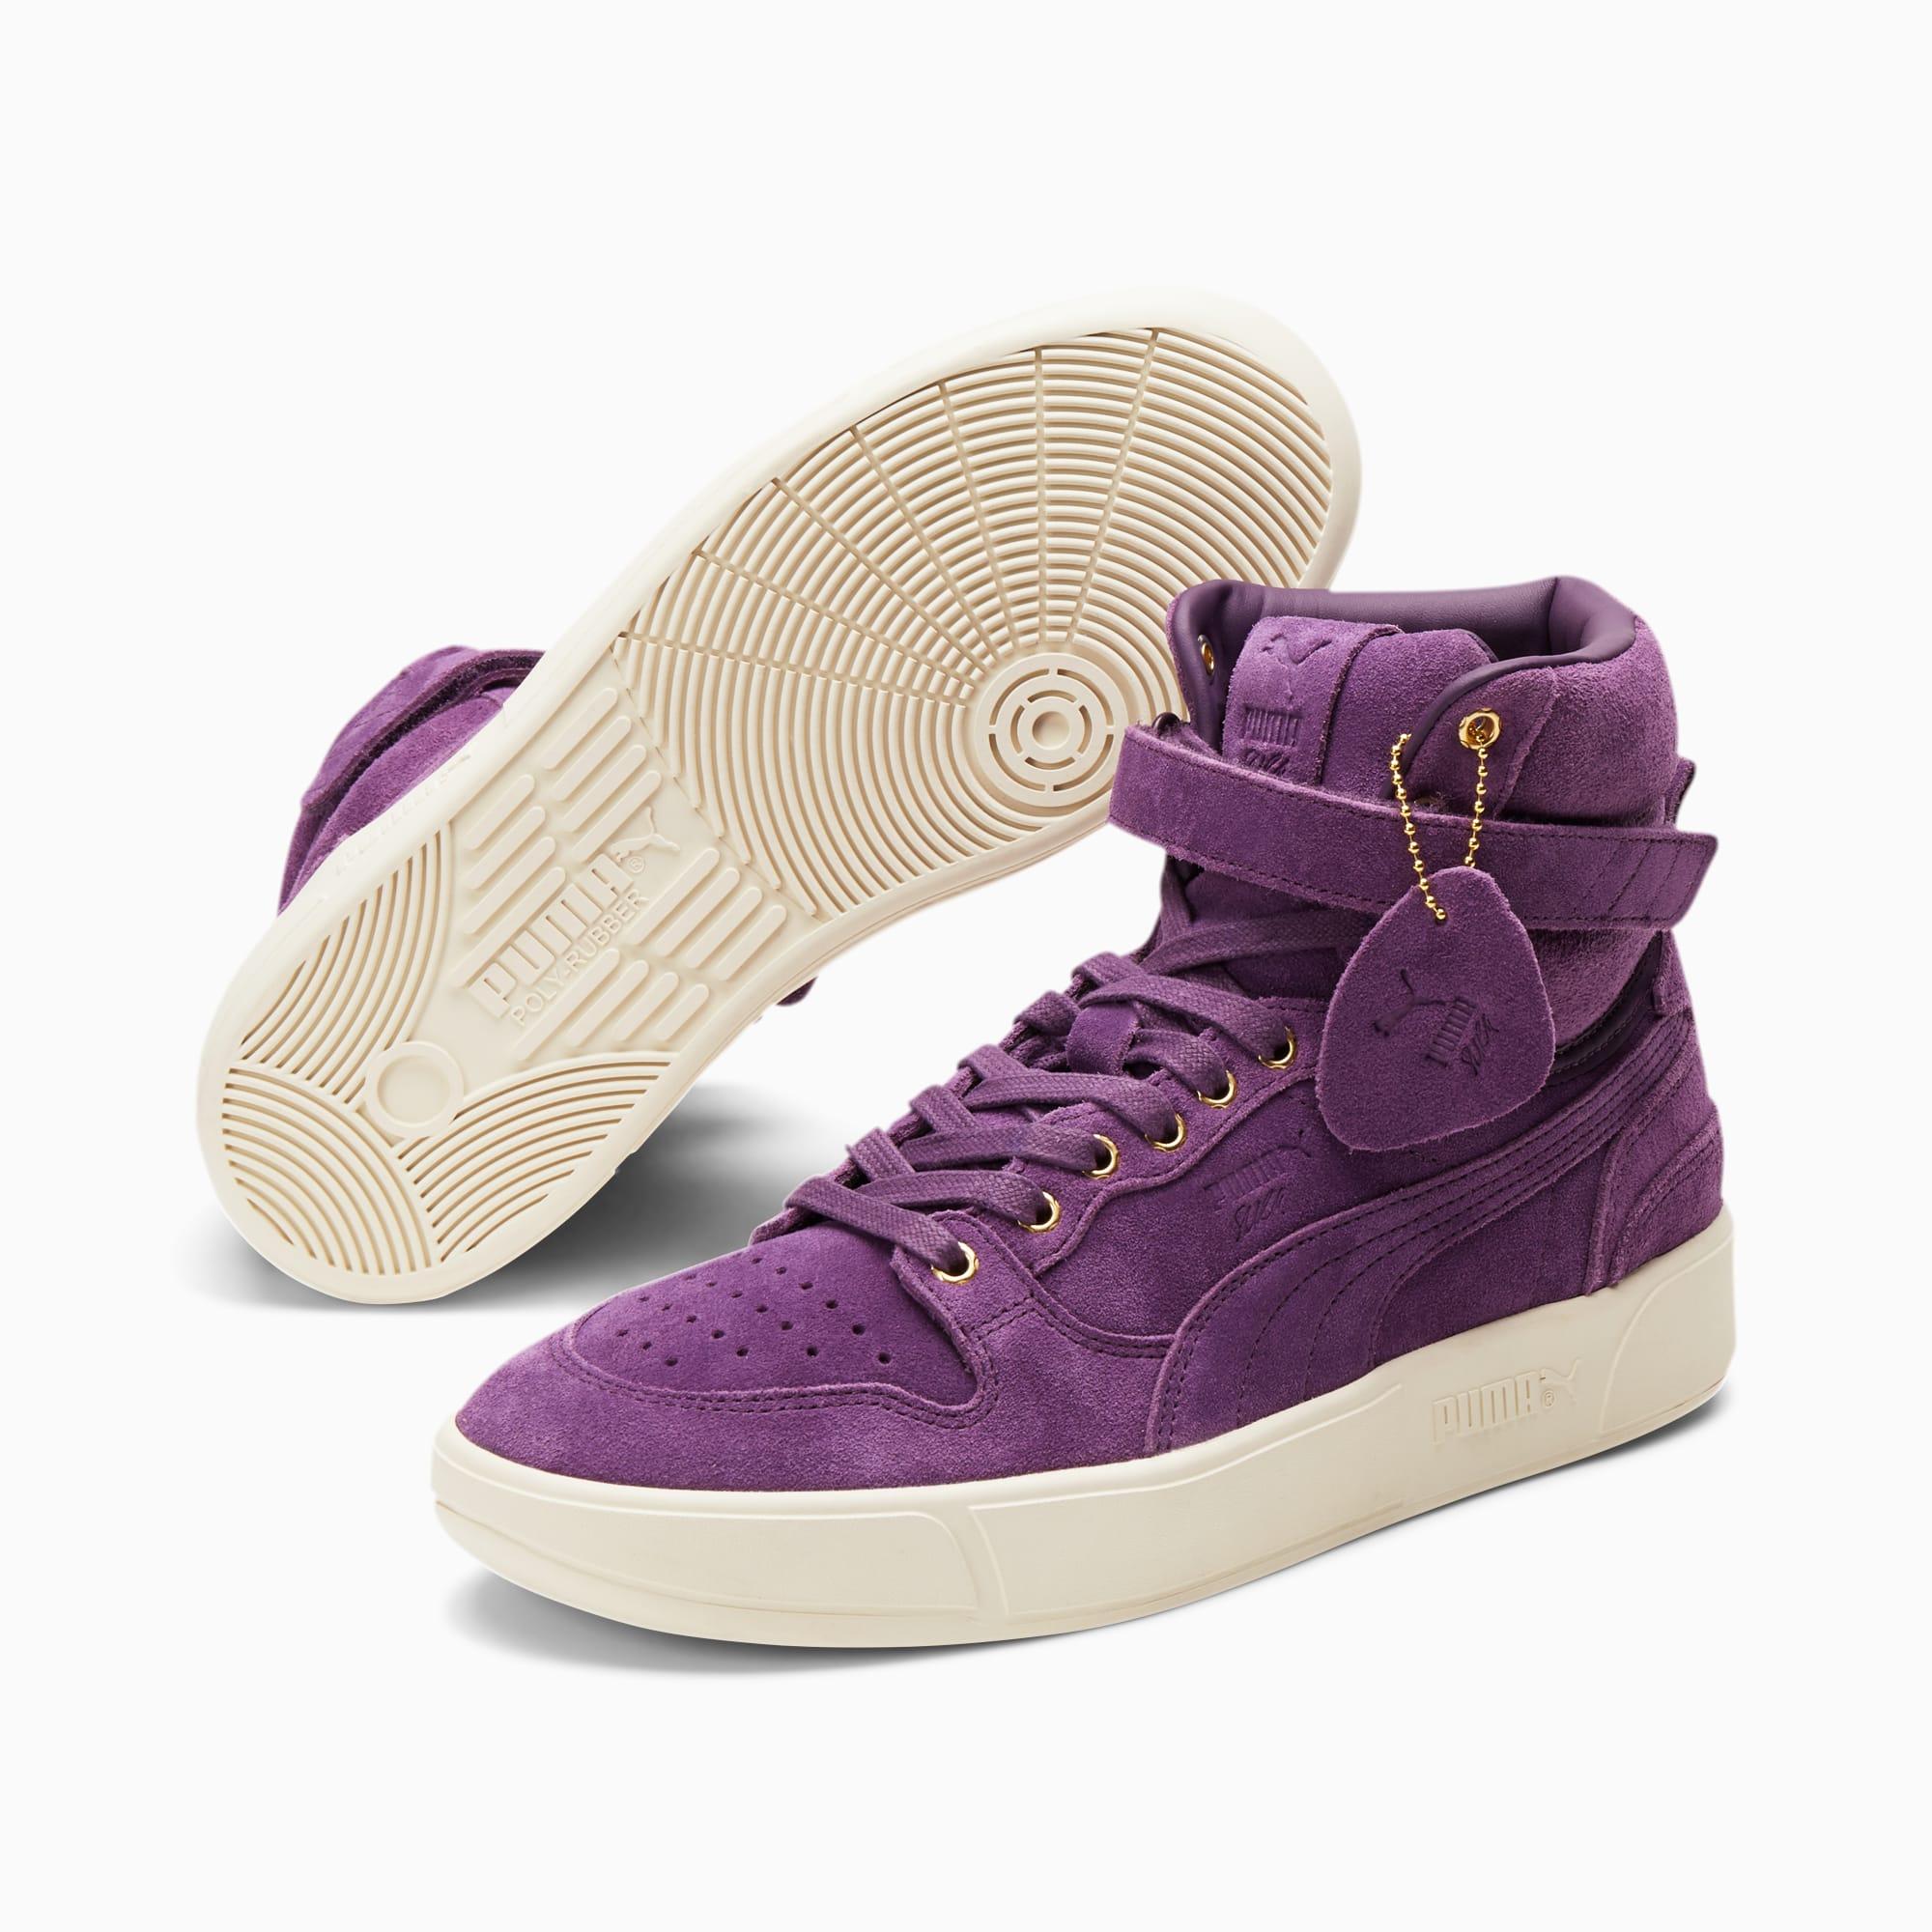 PUMA Suede Sky Lx Mid Slick Rick Sneakers in Plum Purple-Plum Purple (Purple)  for Men | Lyst